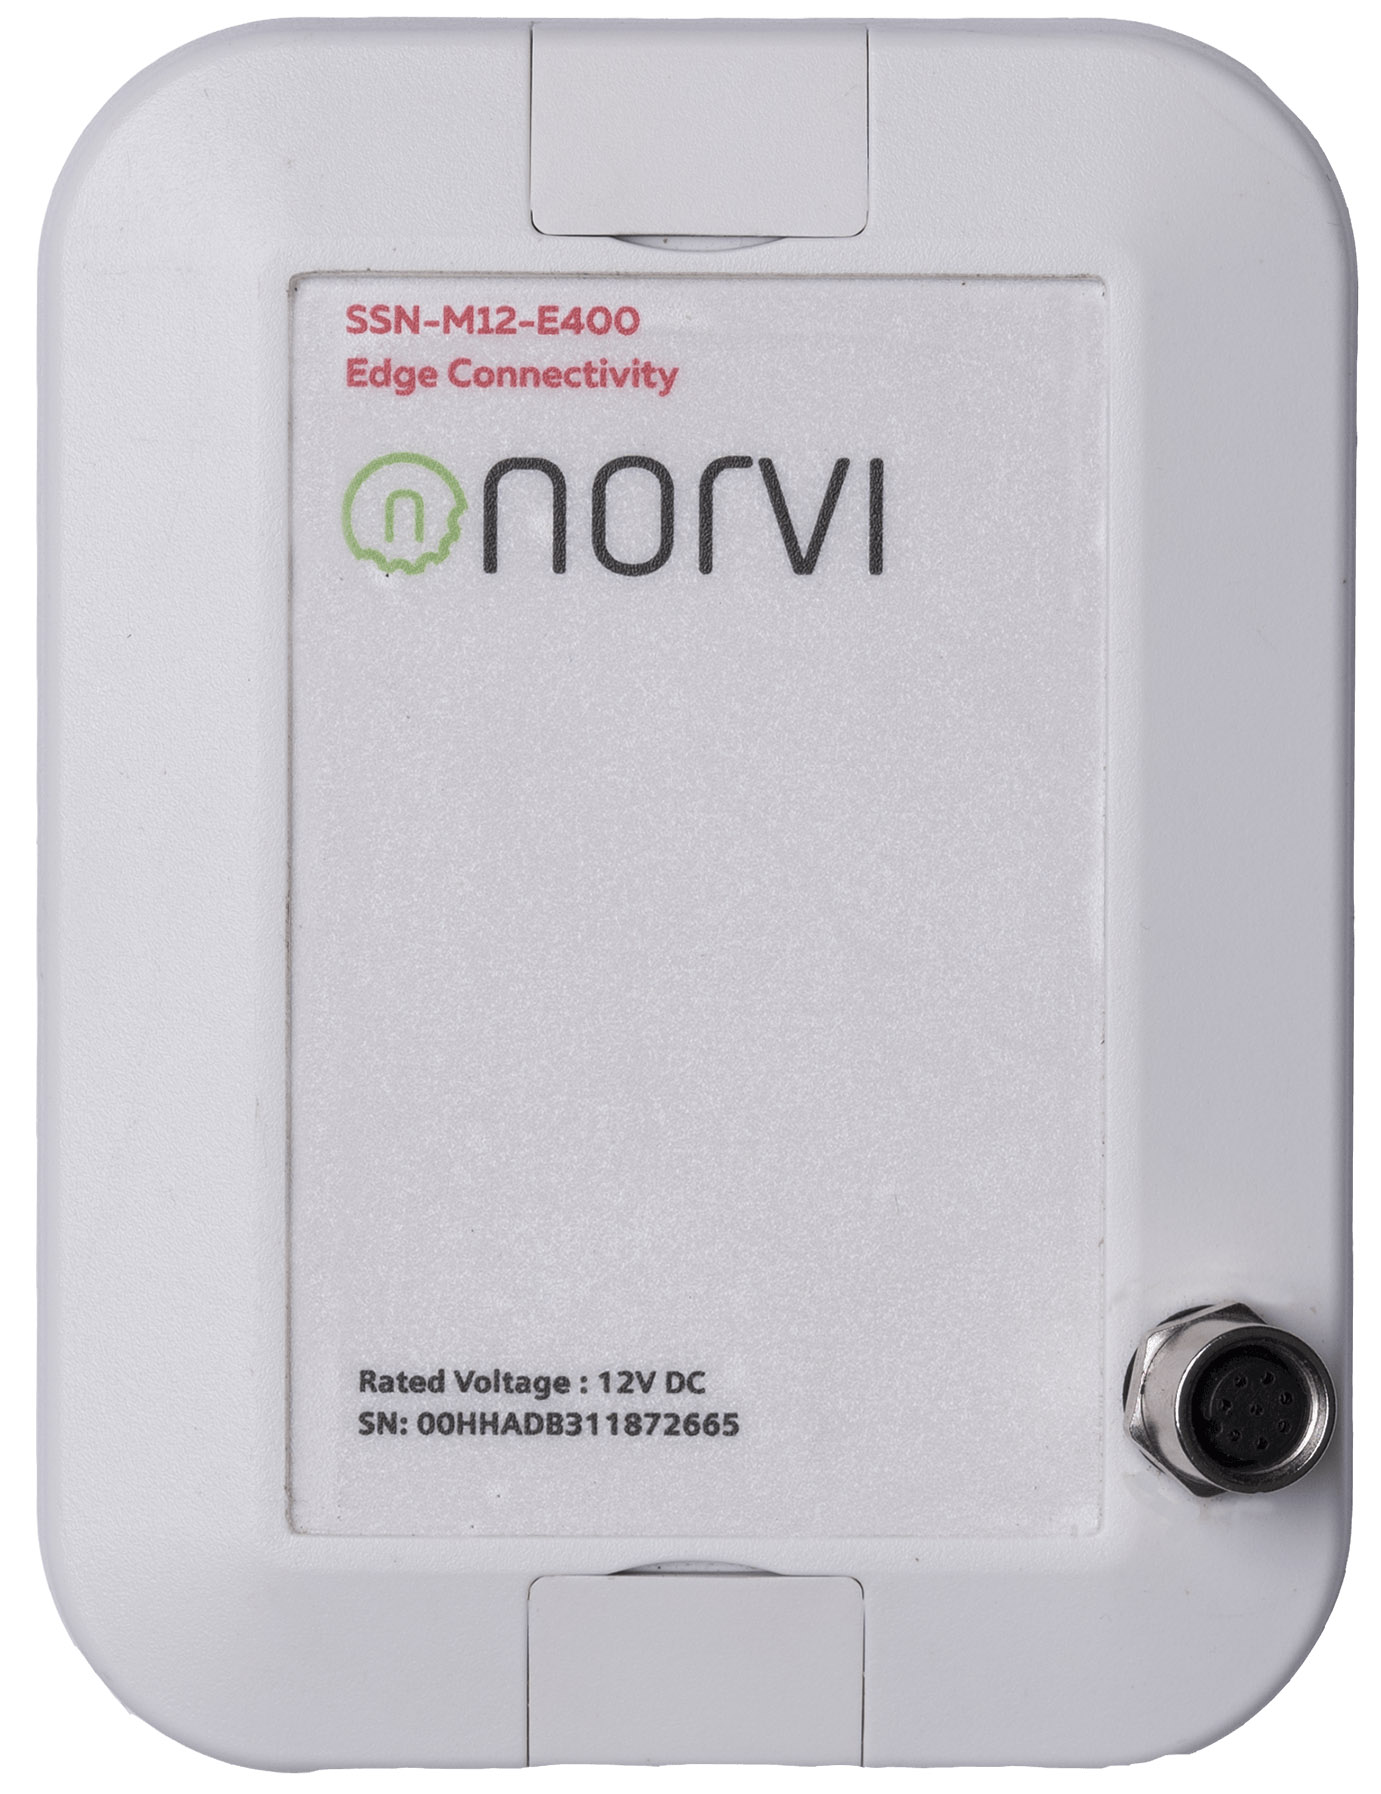 NORVI EC-M11-BC-C1 (Programmable IoT Node, Wallmount, WiFi/BT, Built-in Battery)